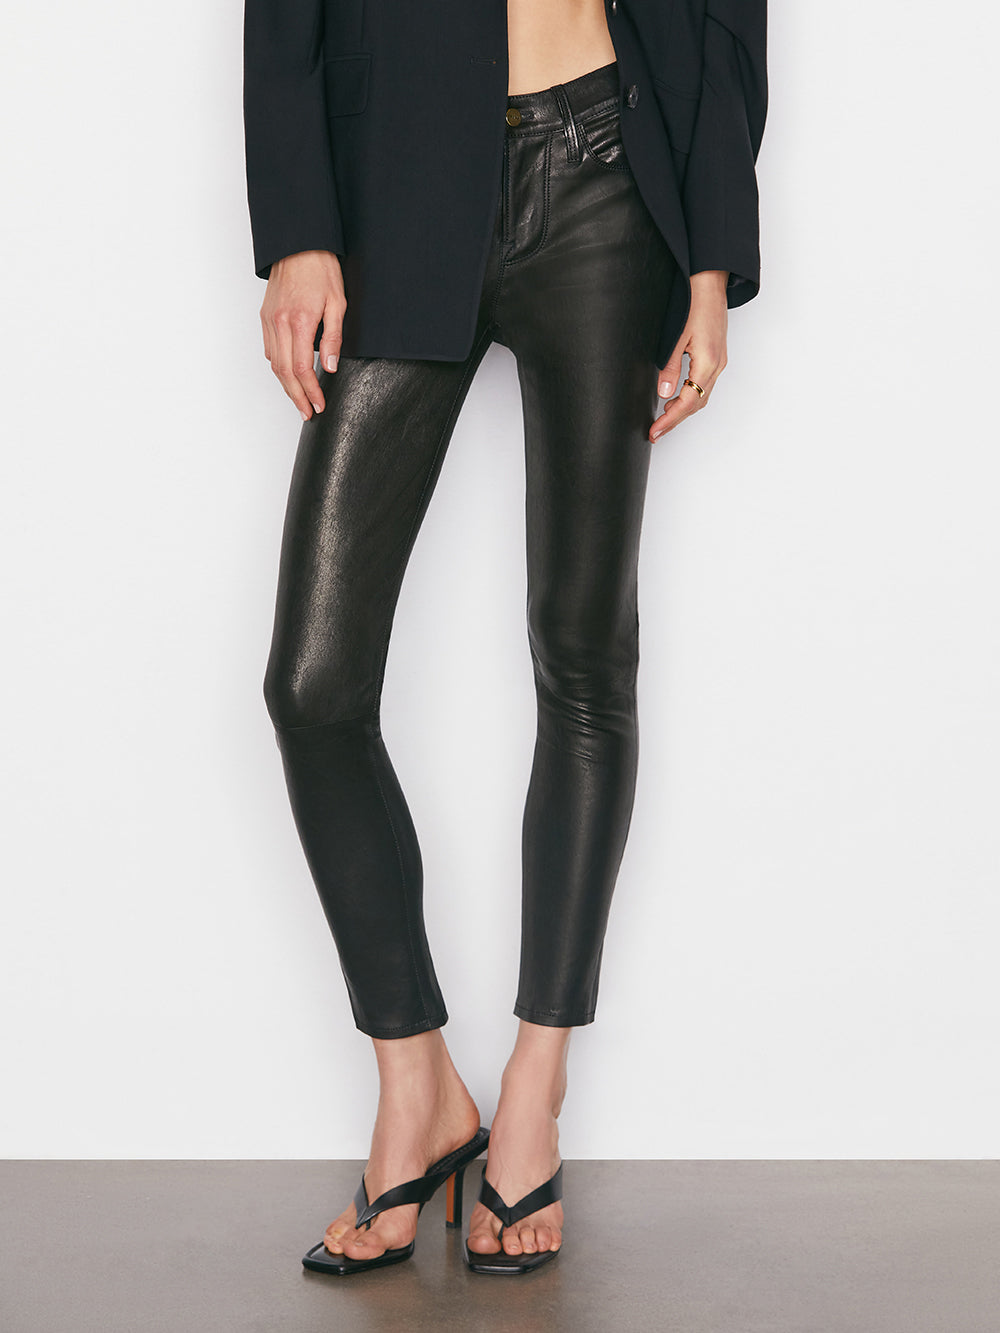 Black 'Le Jane' Leather Pants by FRAME on Sale